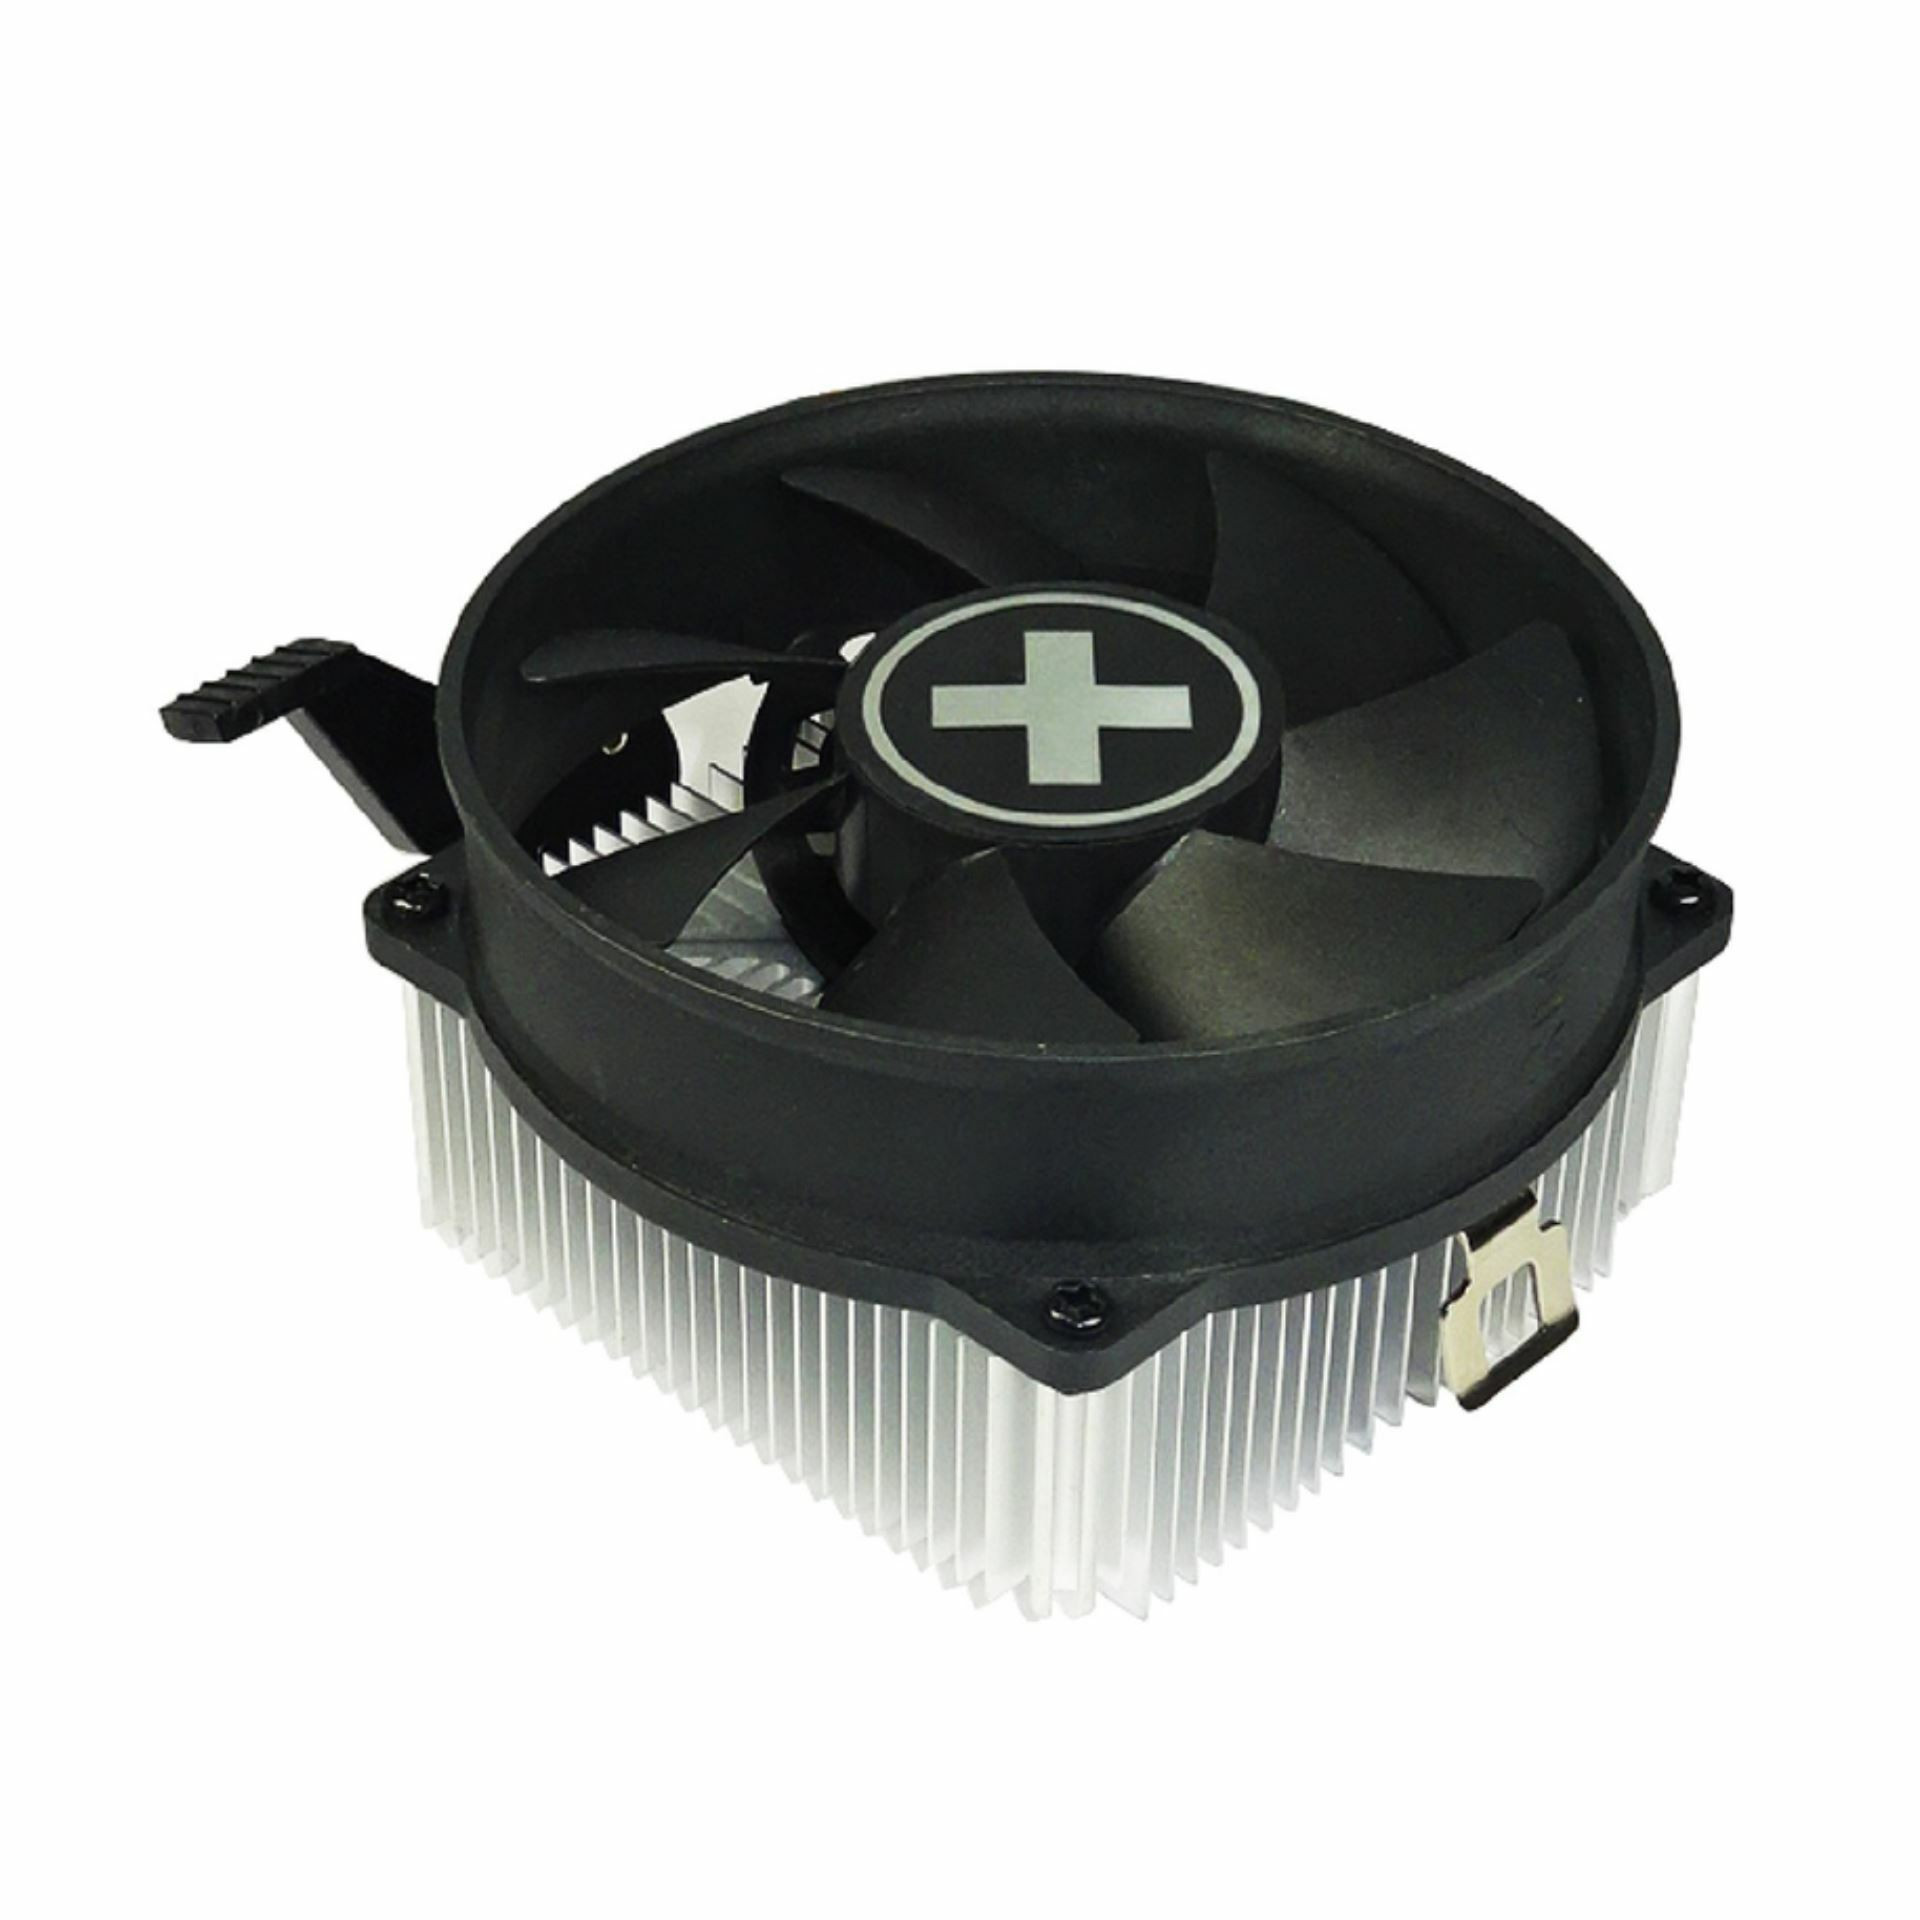 Ventilator-CPU AMD AM/FM Performance C, Heatpipe XC033 Xilence